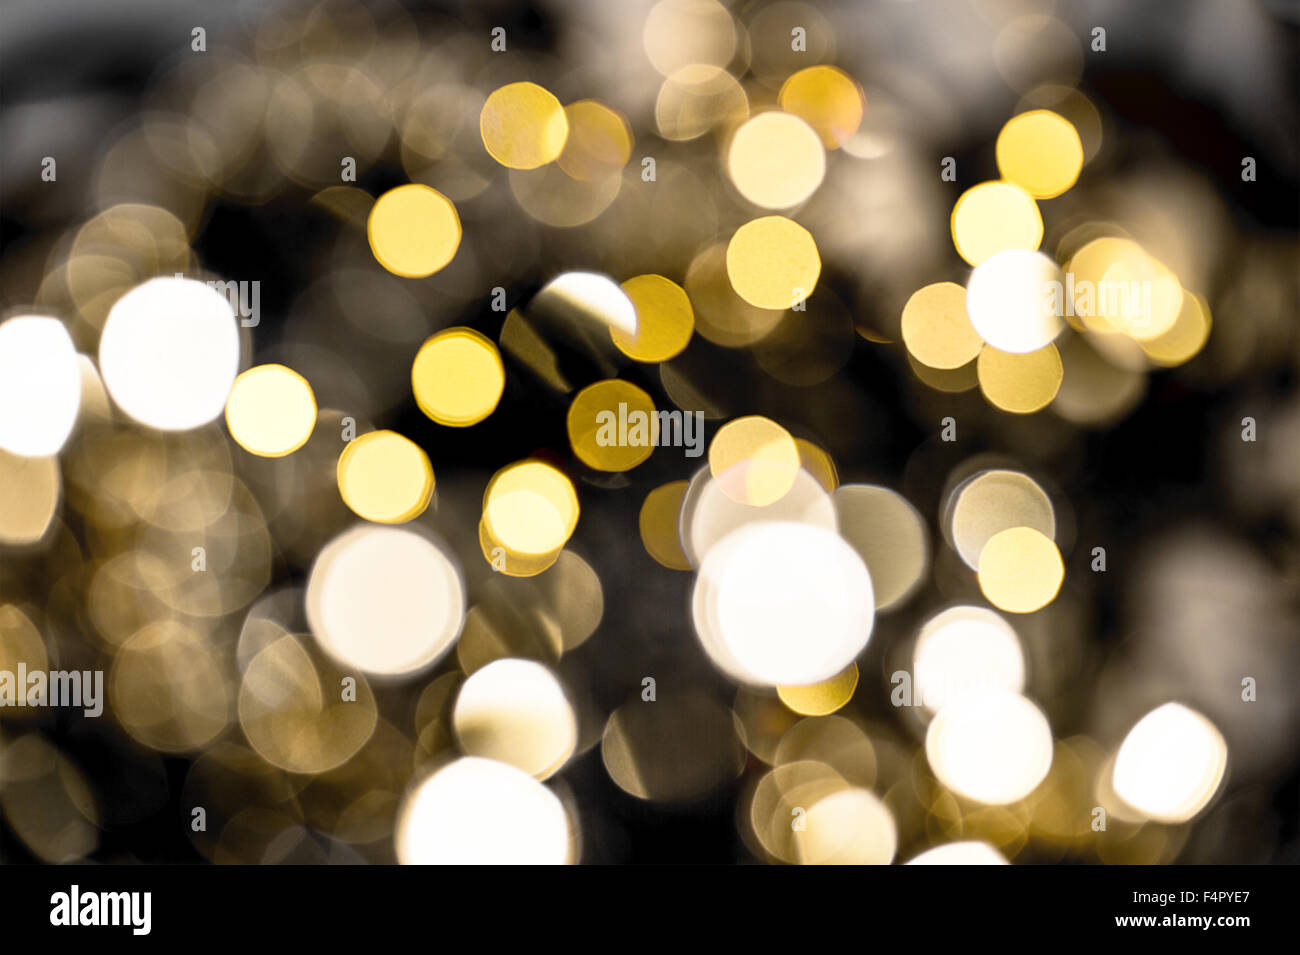 defocused lights. shiny dark background. festive decorations Stock Photo